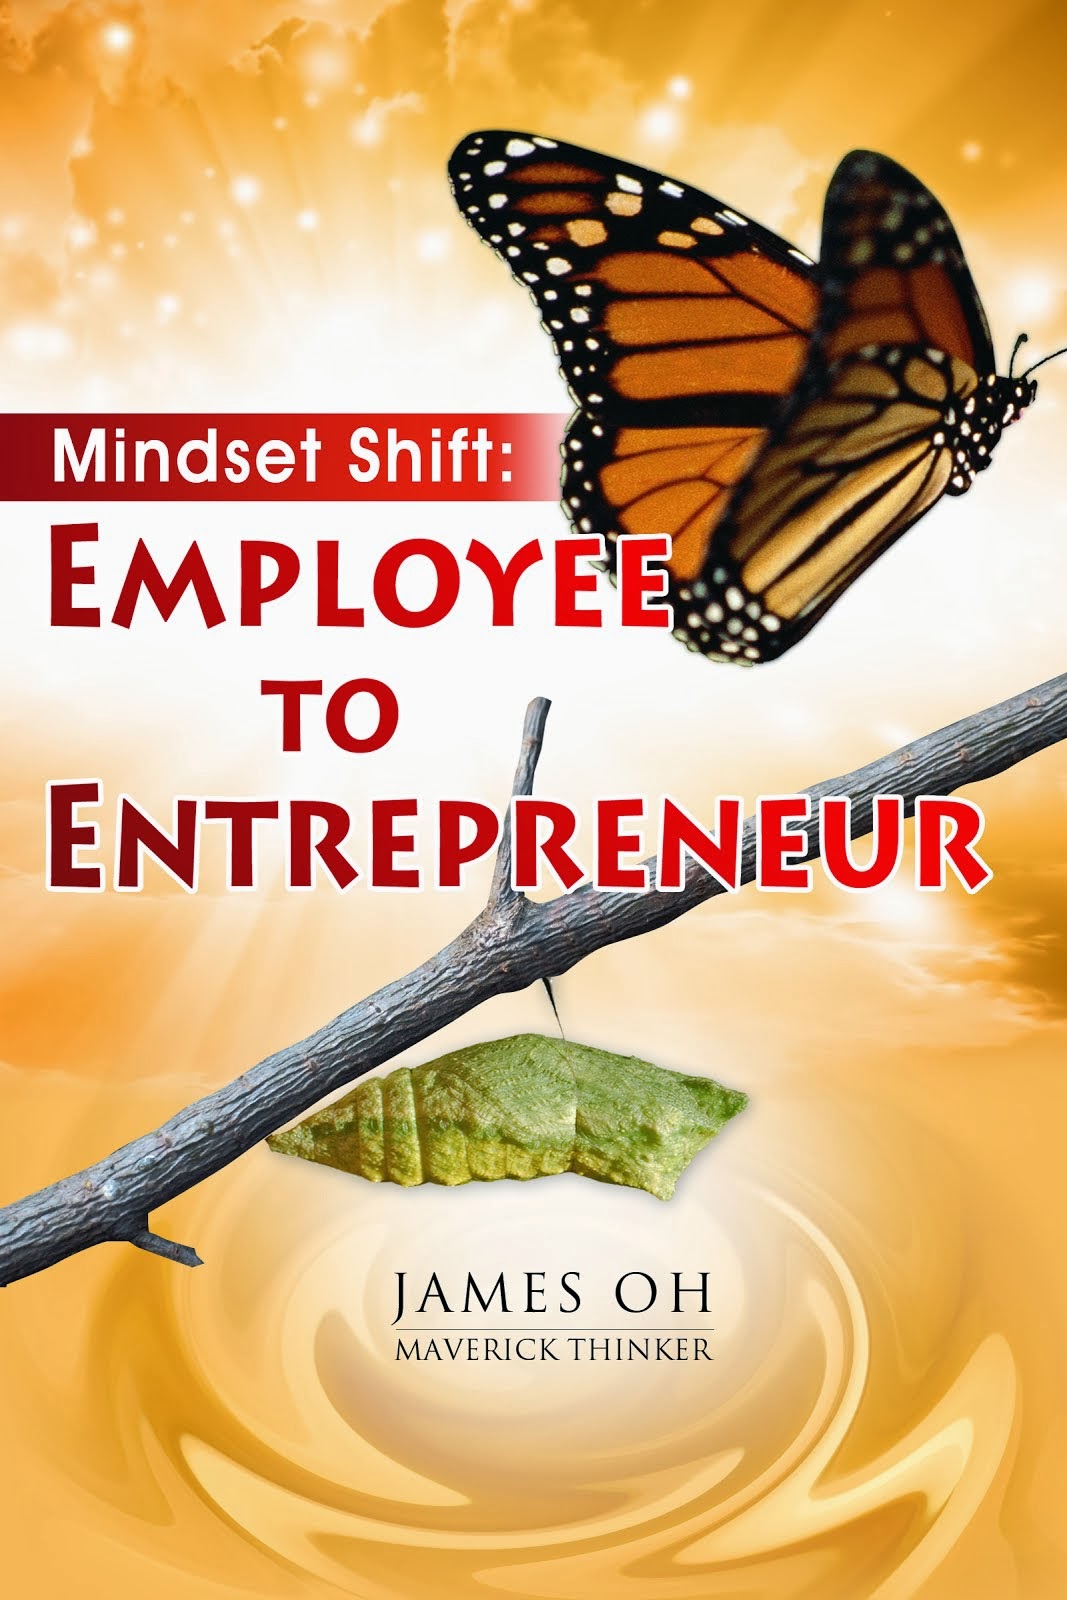 Mindset Shift: Employee to Entrepreneur